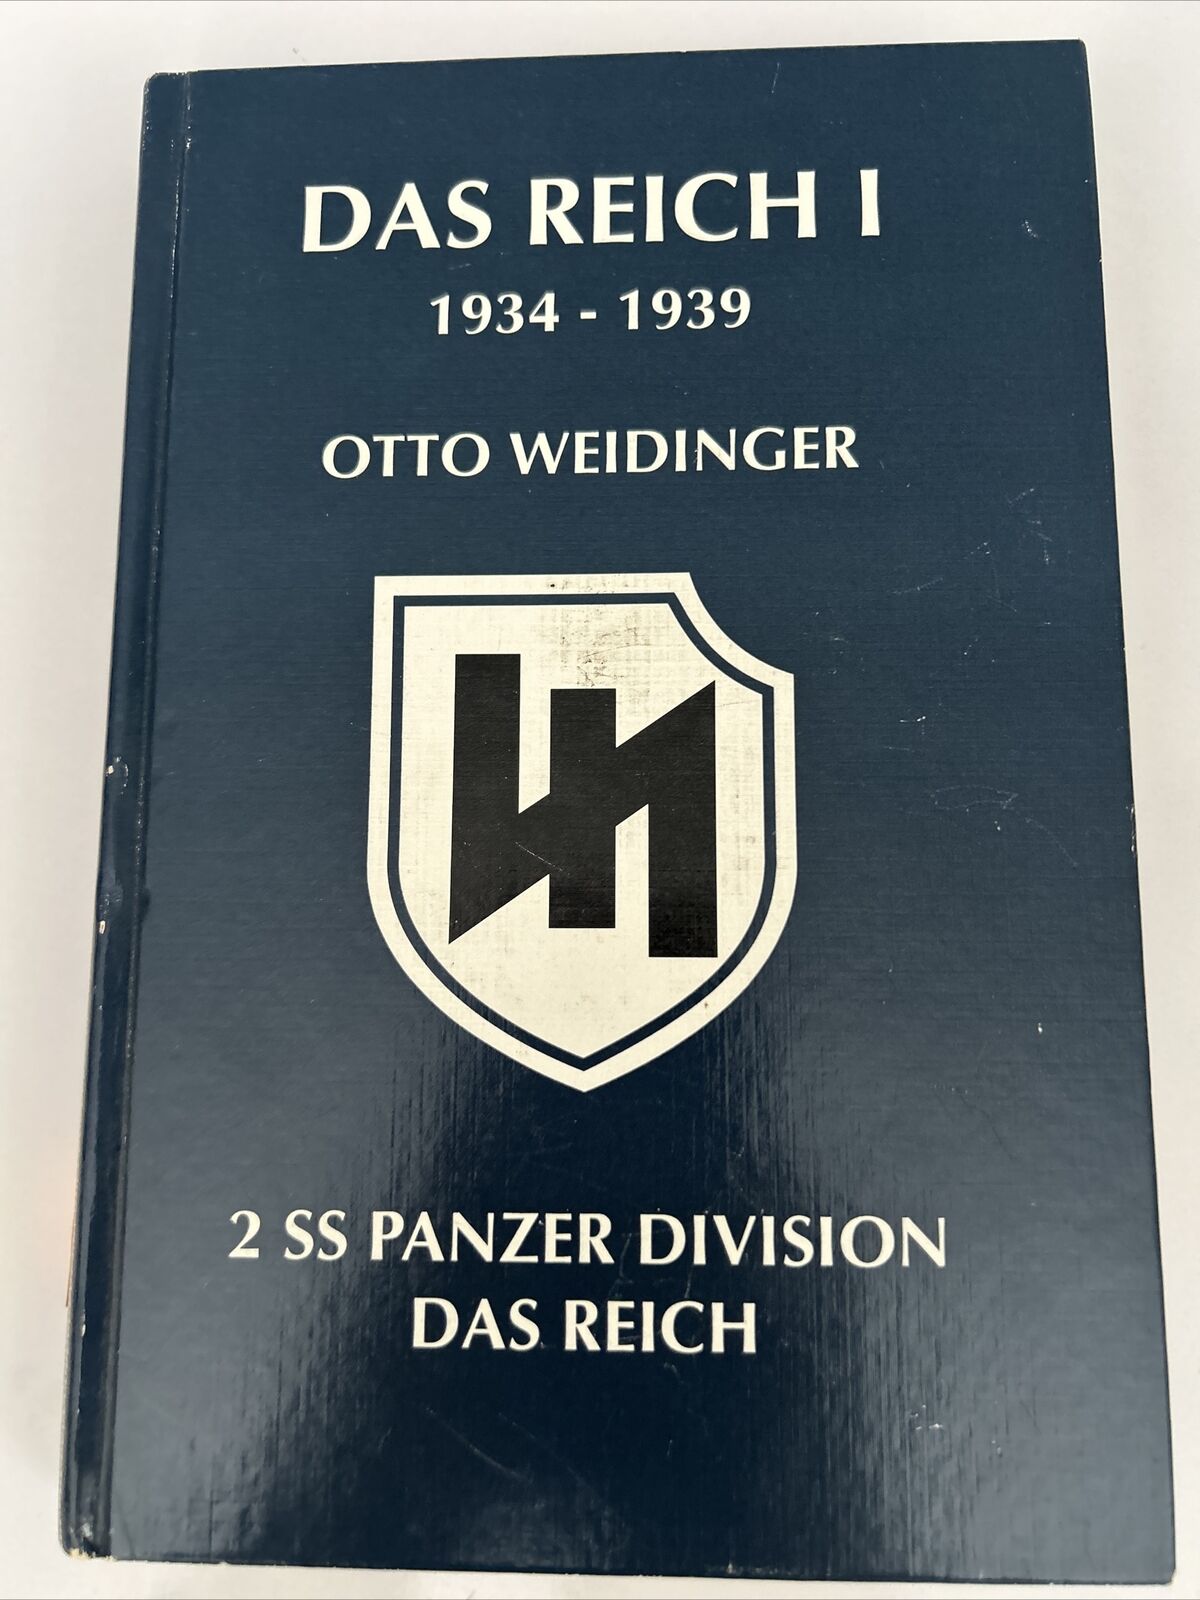 Rare Autographed Copy Das Reich 1 Otto Weidinger 2 SS Panzer Division 1934-1939